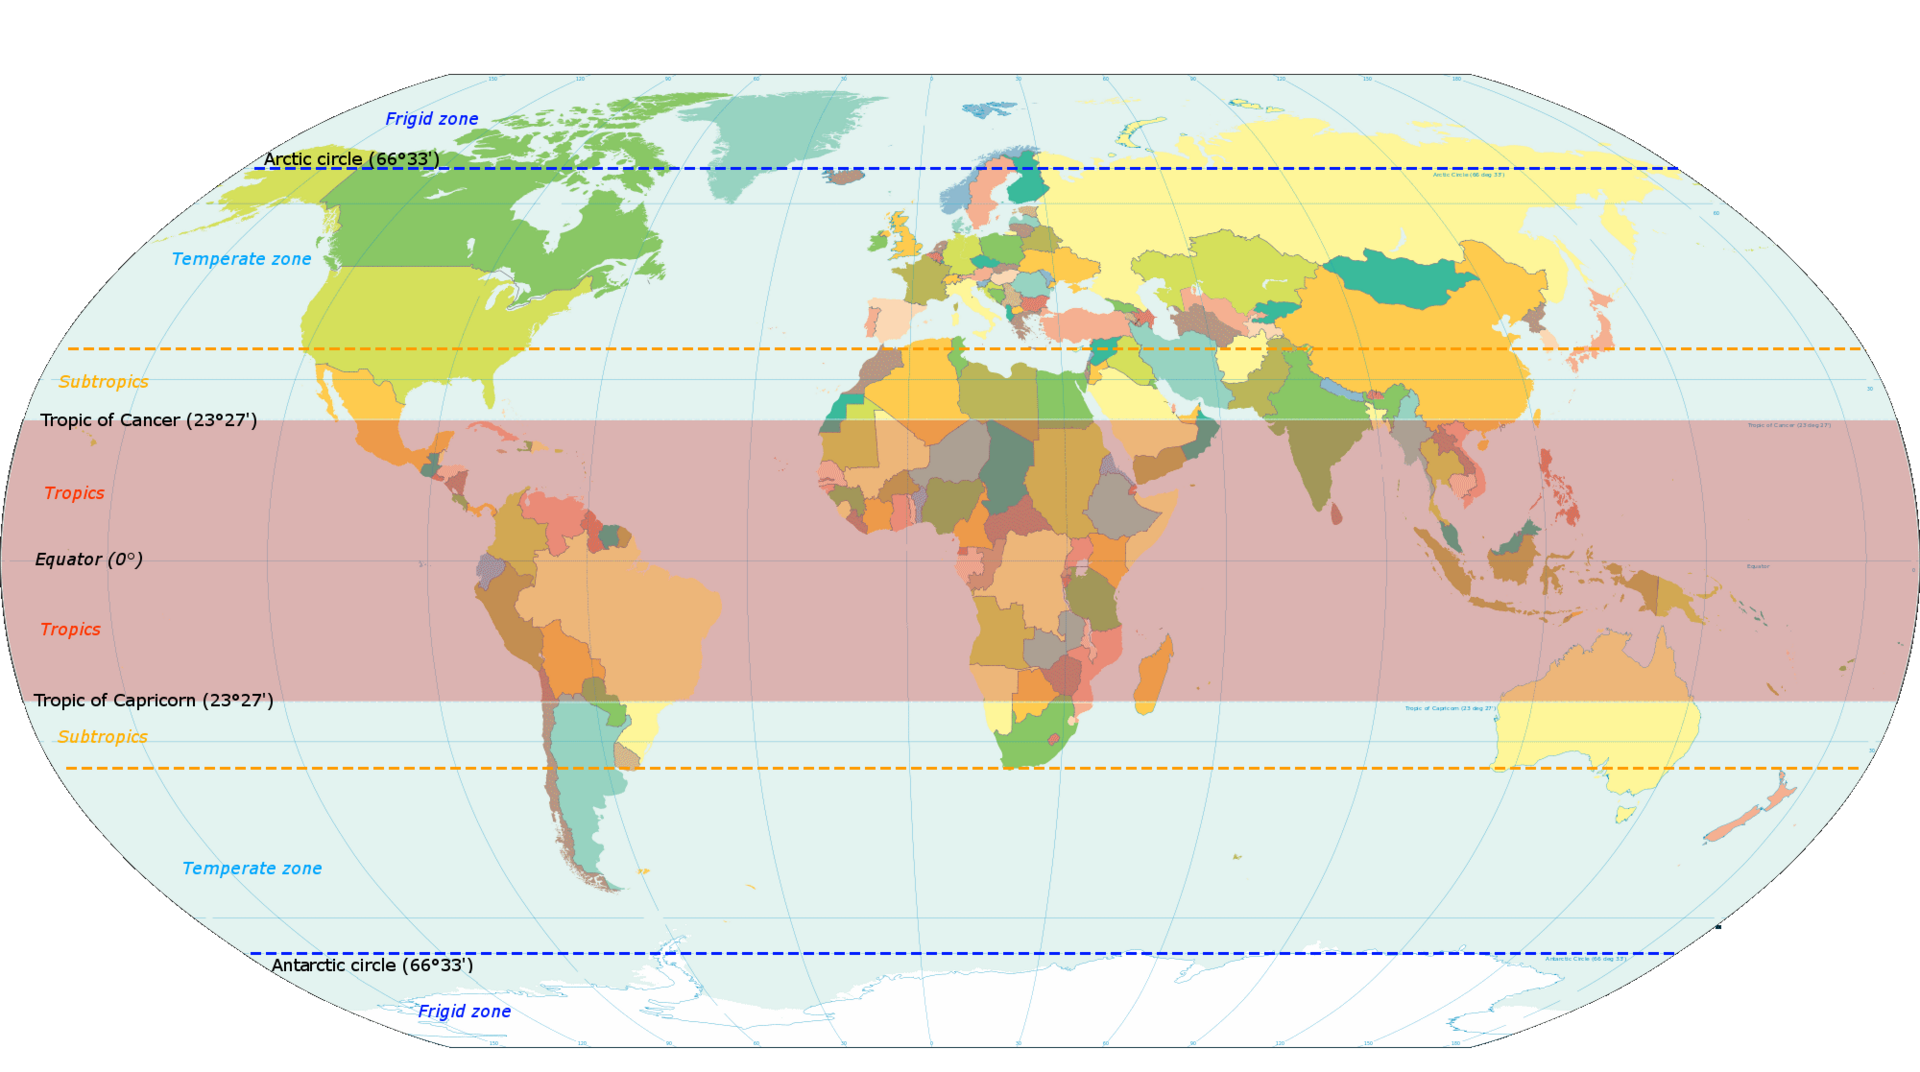 1920px-World_map_indicating_tropics_and_subtropics.png